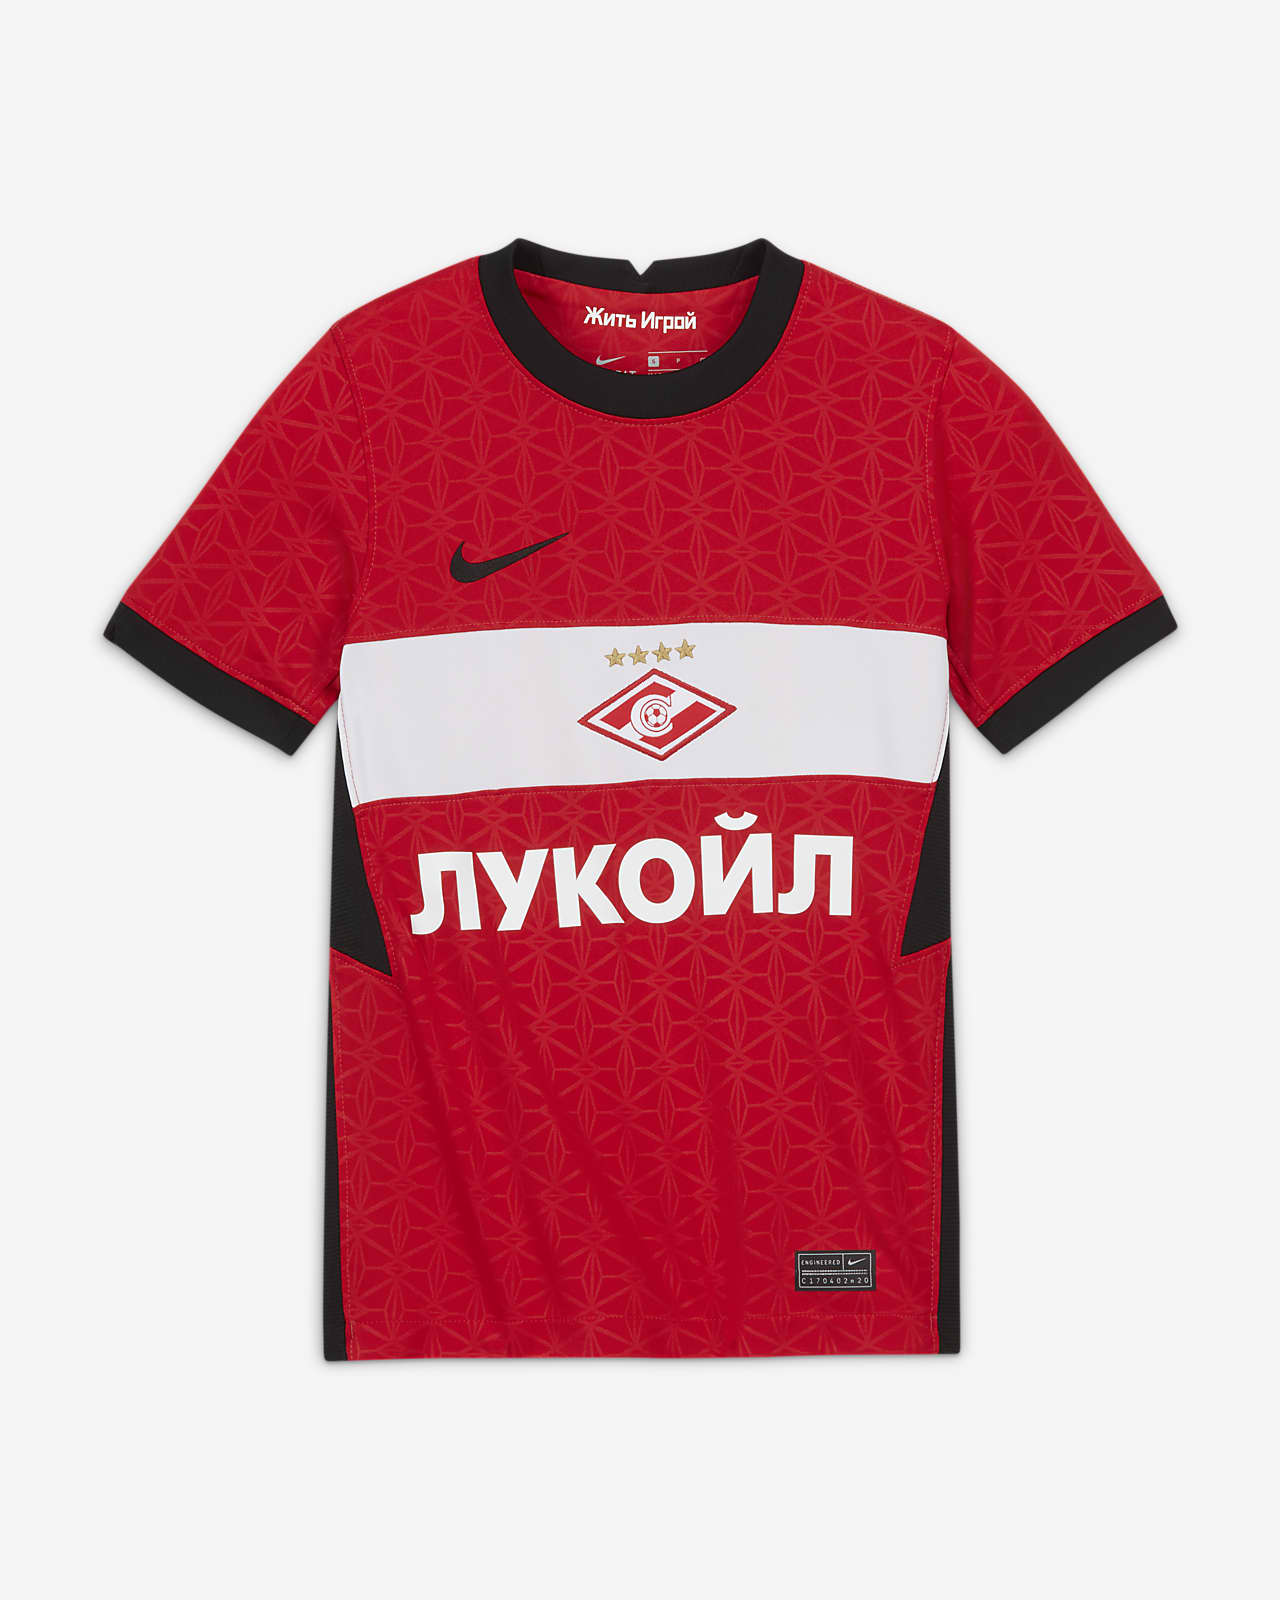 Spartak Moscow 2020 21 Stadium Home Fussballtrikot Fur Altere Kinder Nike De